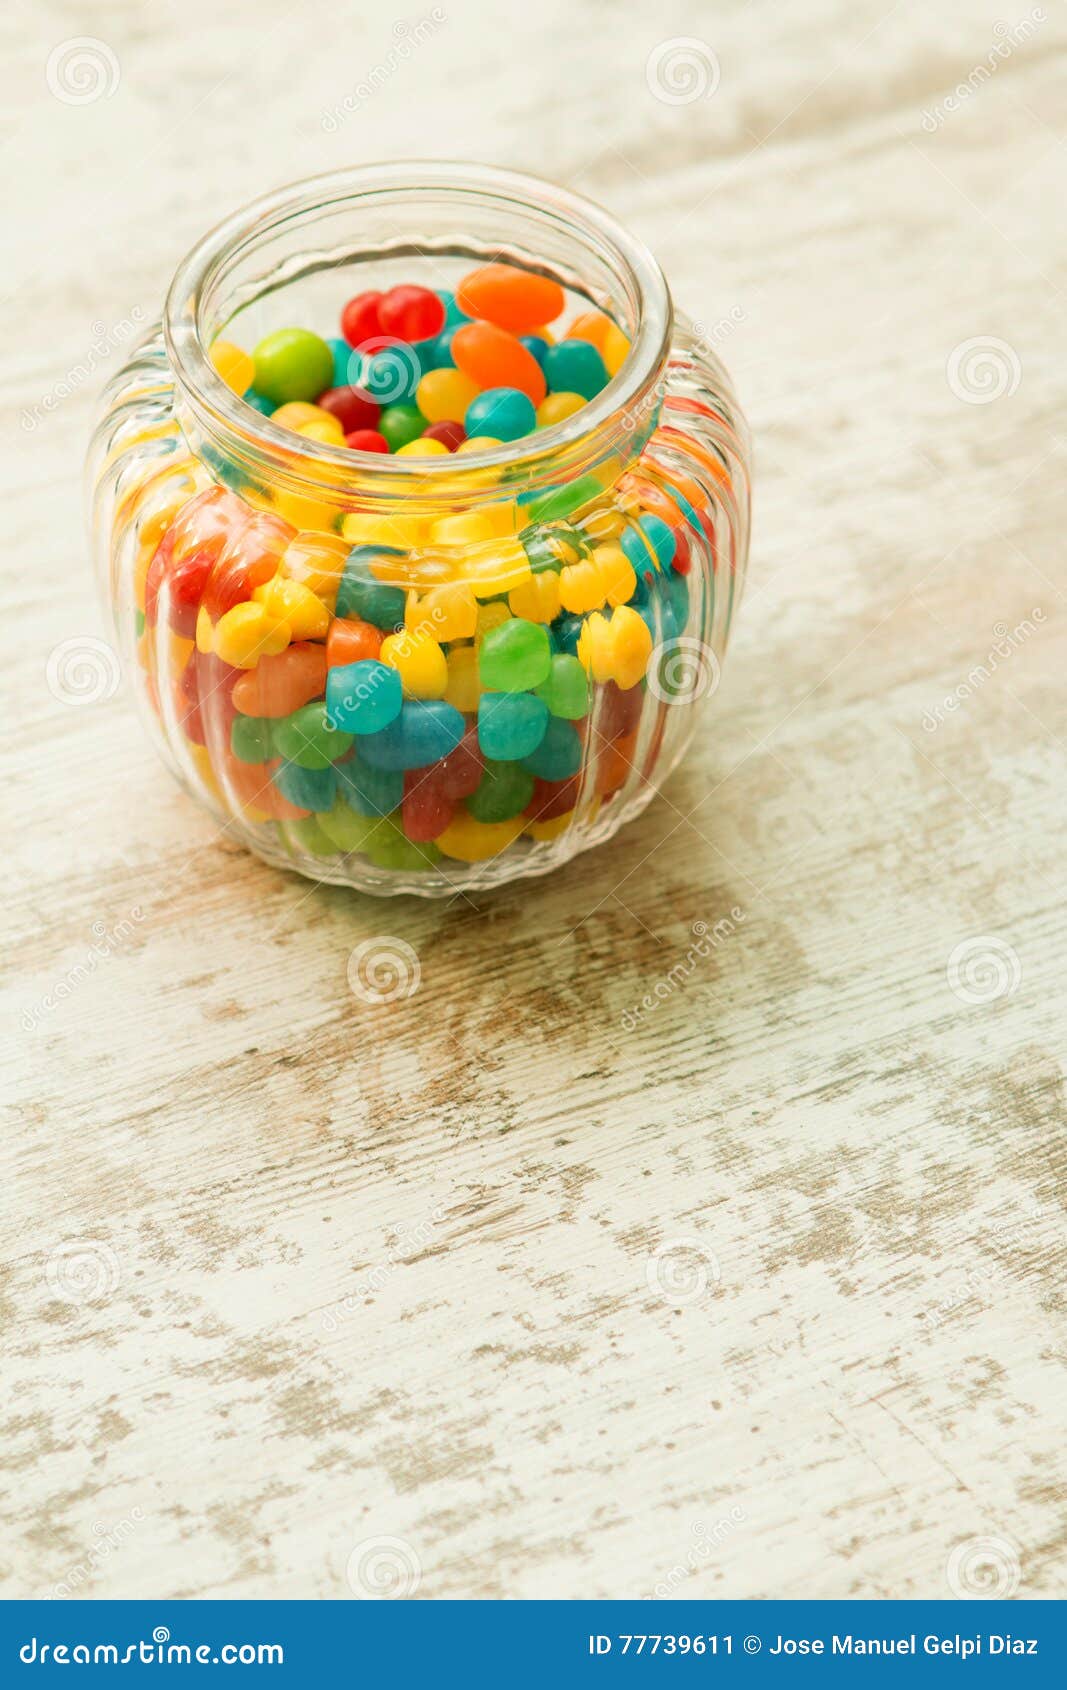 Glass Bowl Full of Jelly Beans Stock Image - Image of bonbon, bright ...